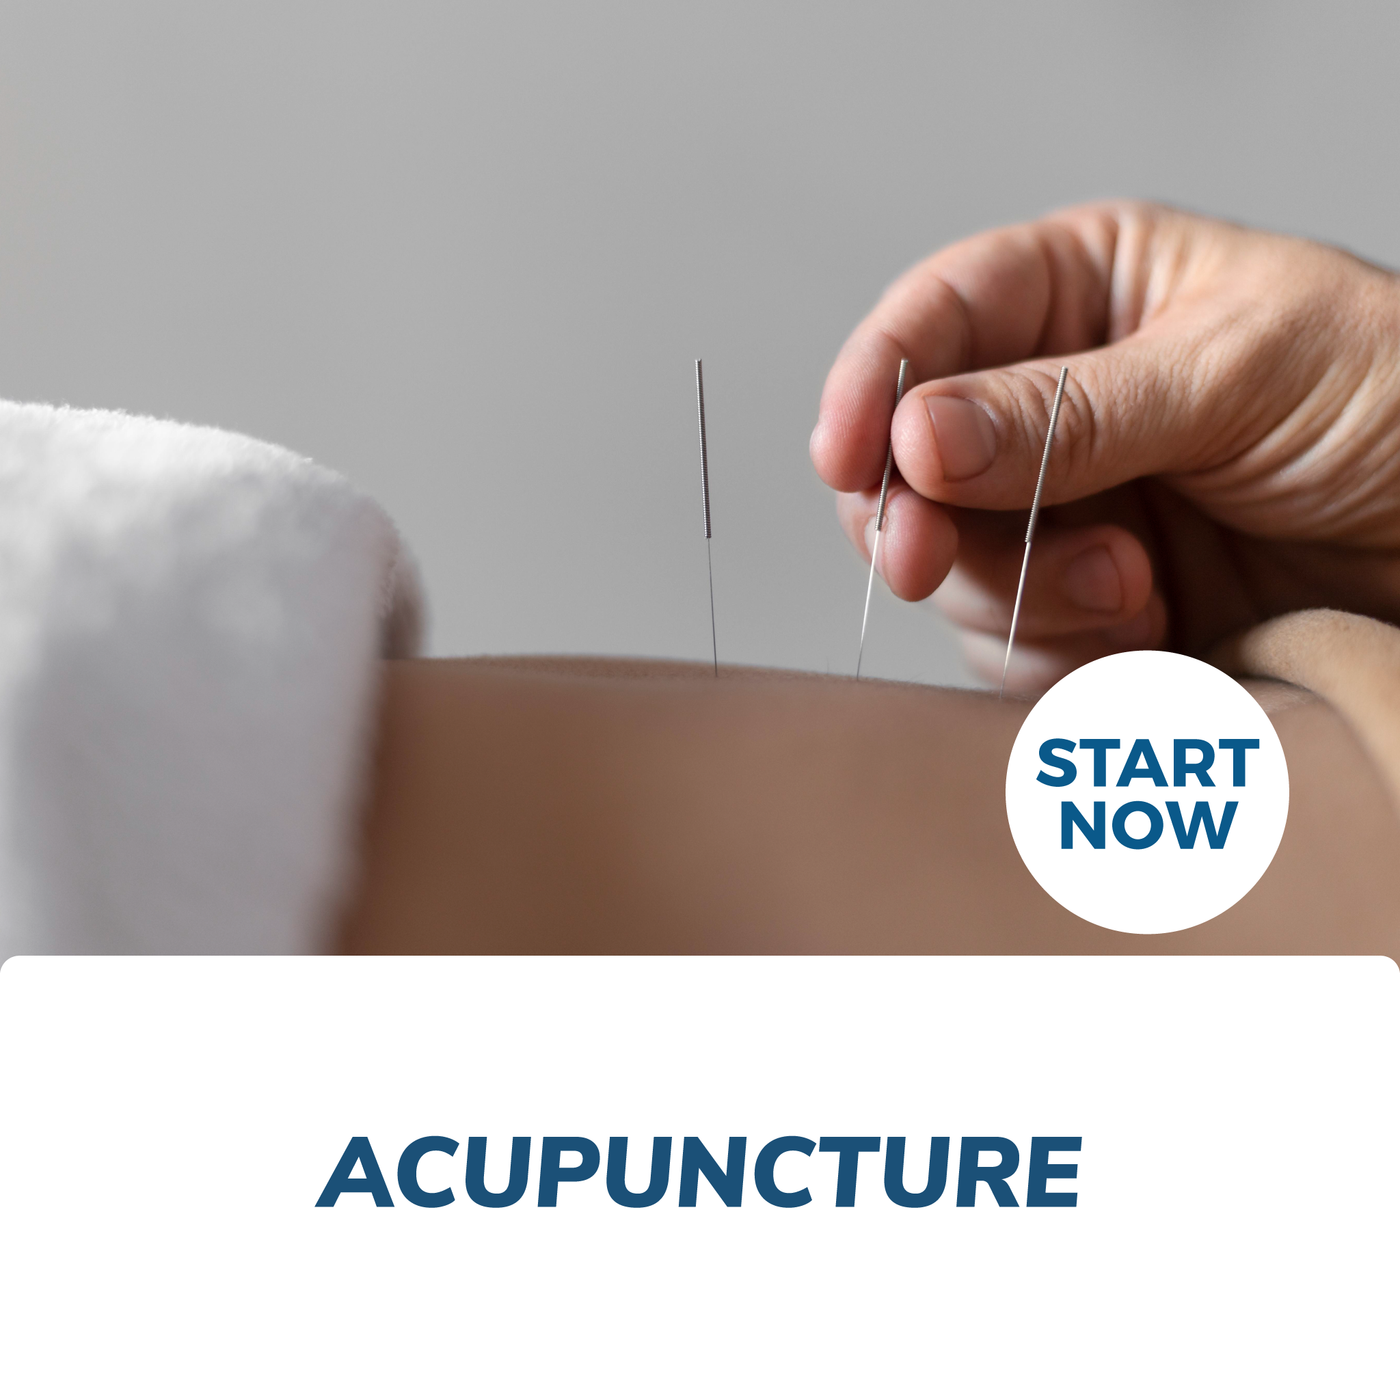 Acupuncture Online Course Courses For Success